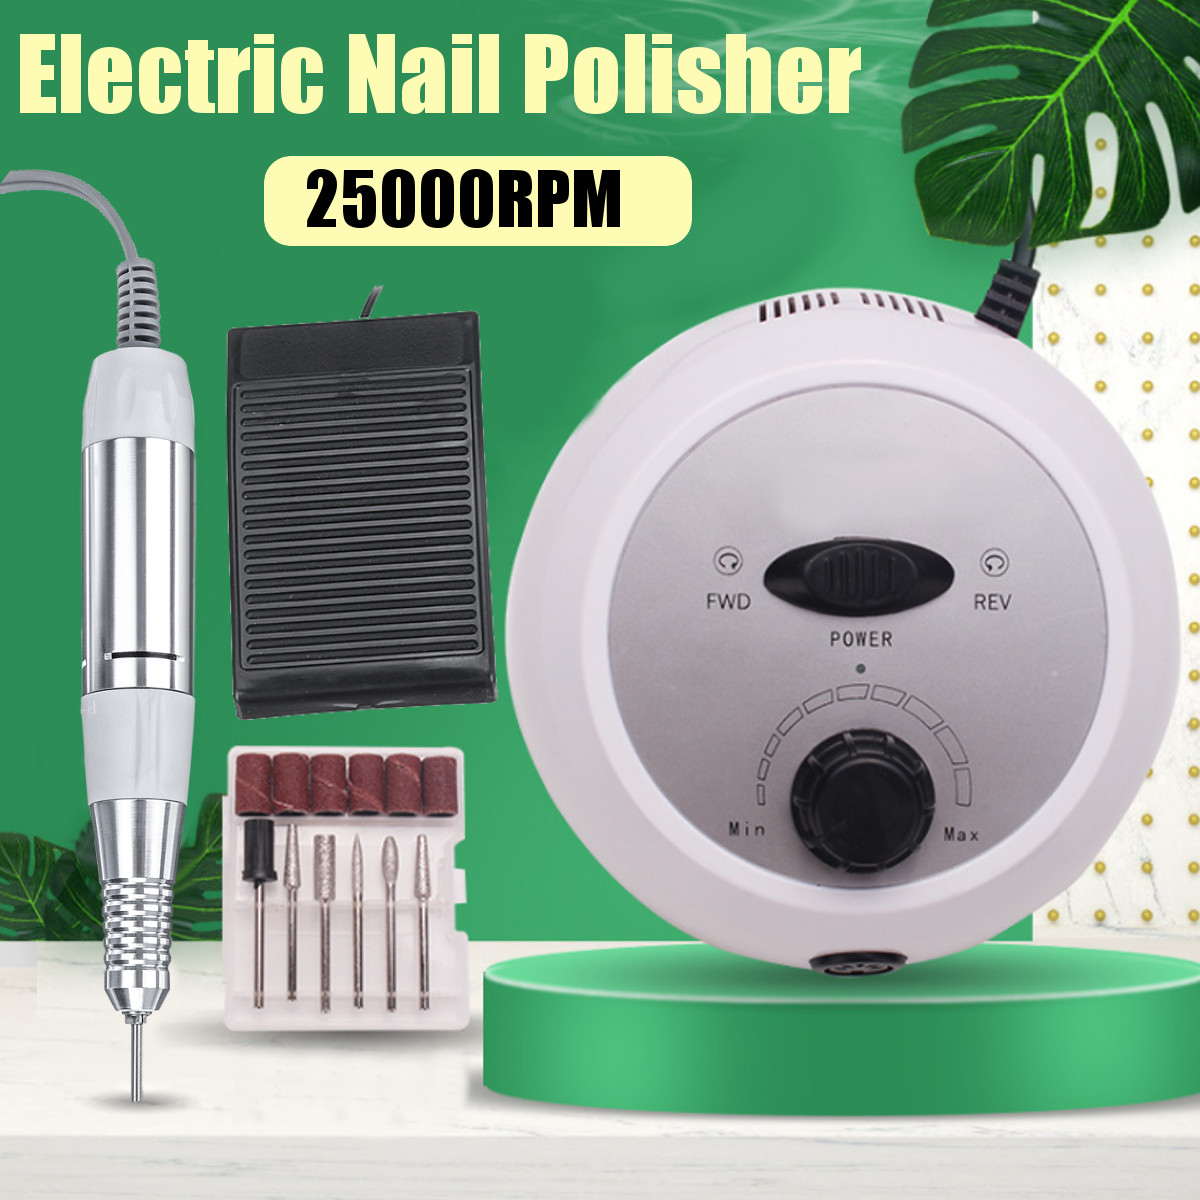 25000RPM-Electric-Nail-Polisher-Nail-Drill-Machine-Pen-Bit-Set-Manicure-Pedicure-Tool-1663079-2